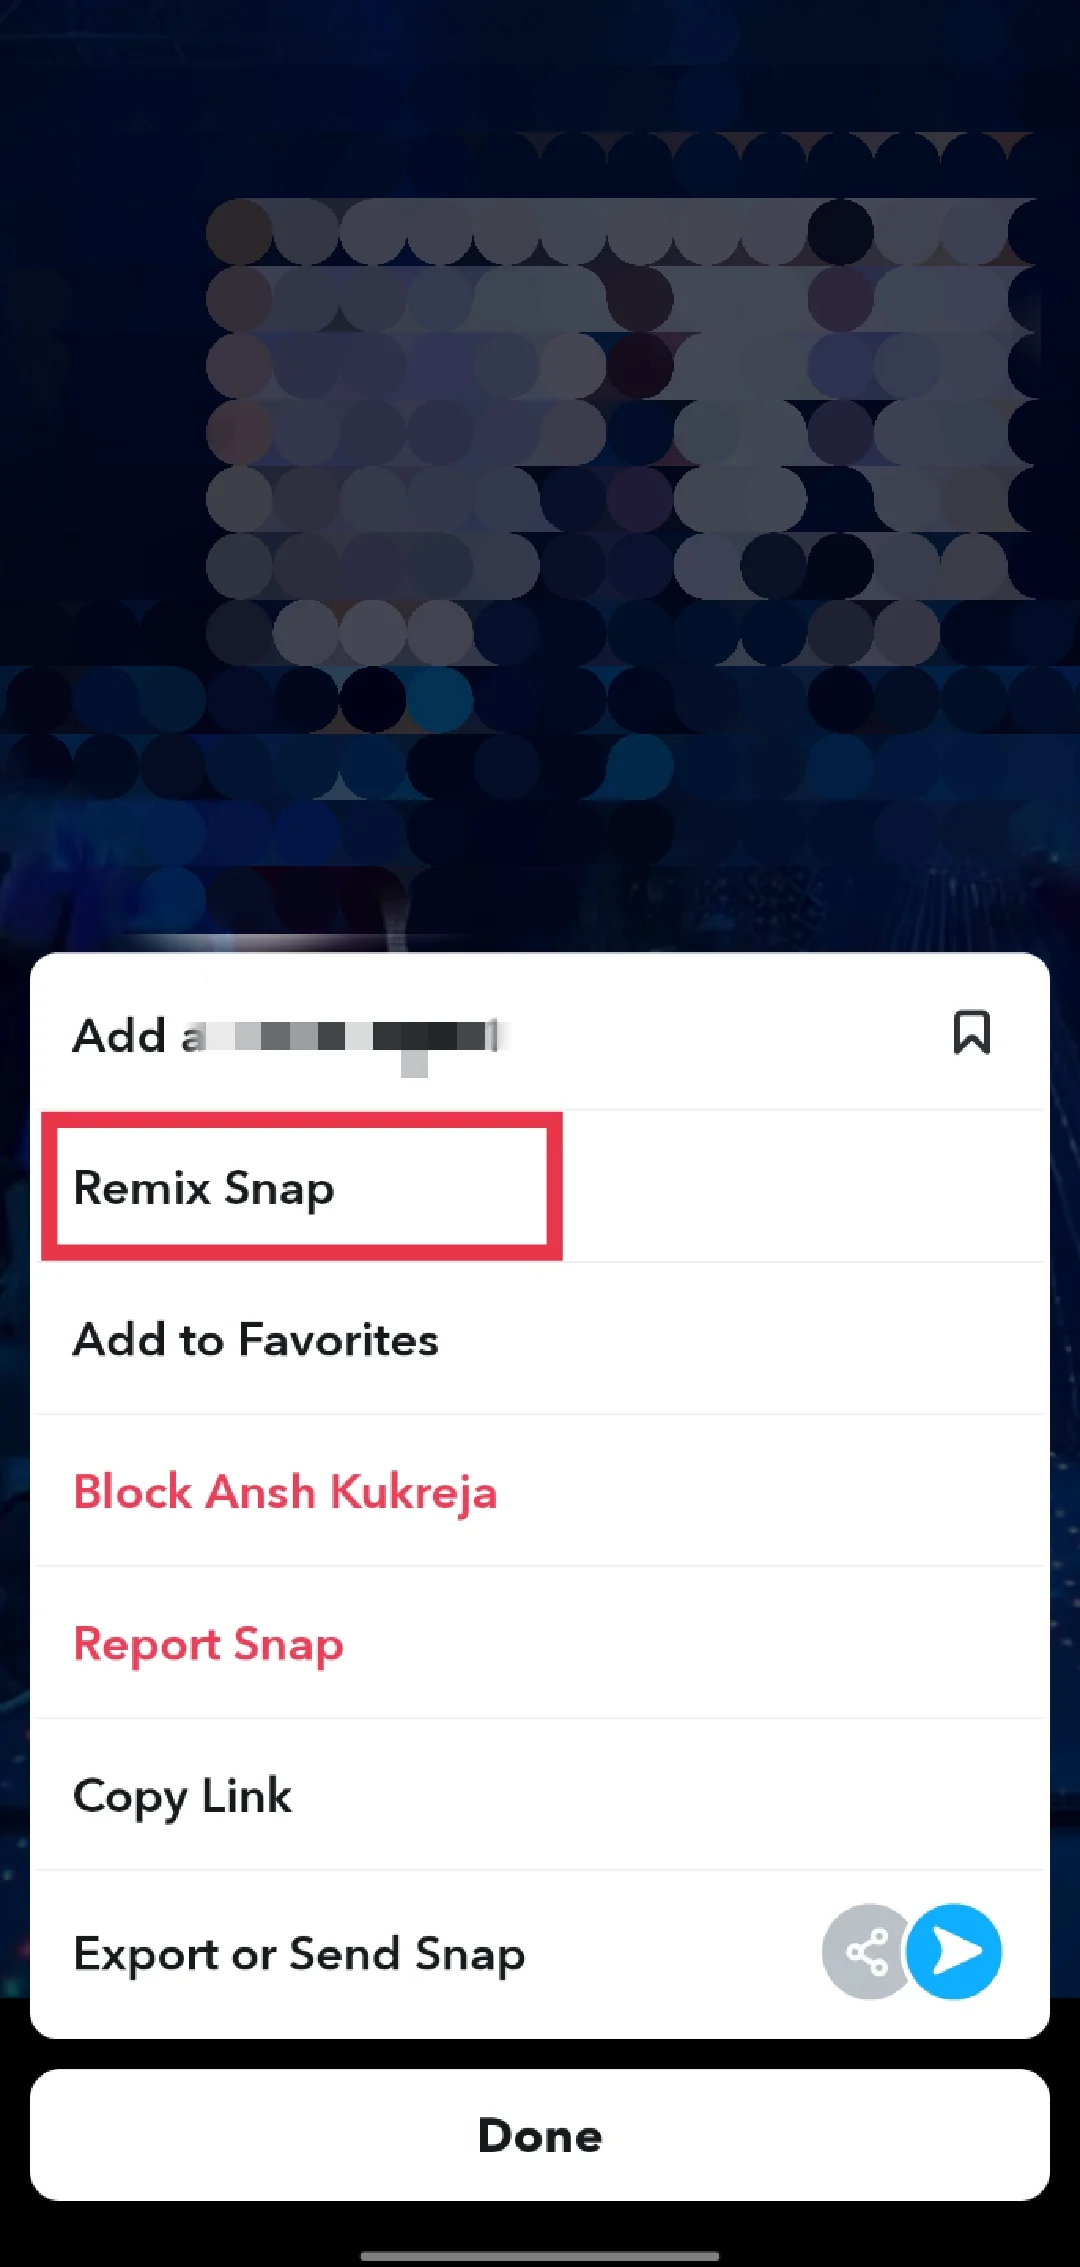 Snapchat Remix Snap option